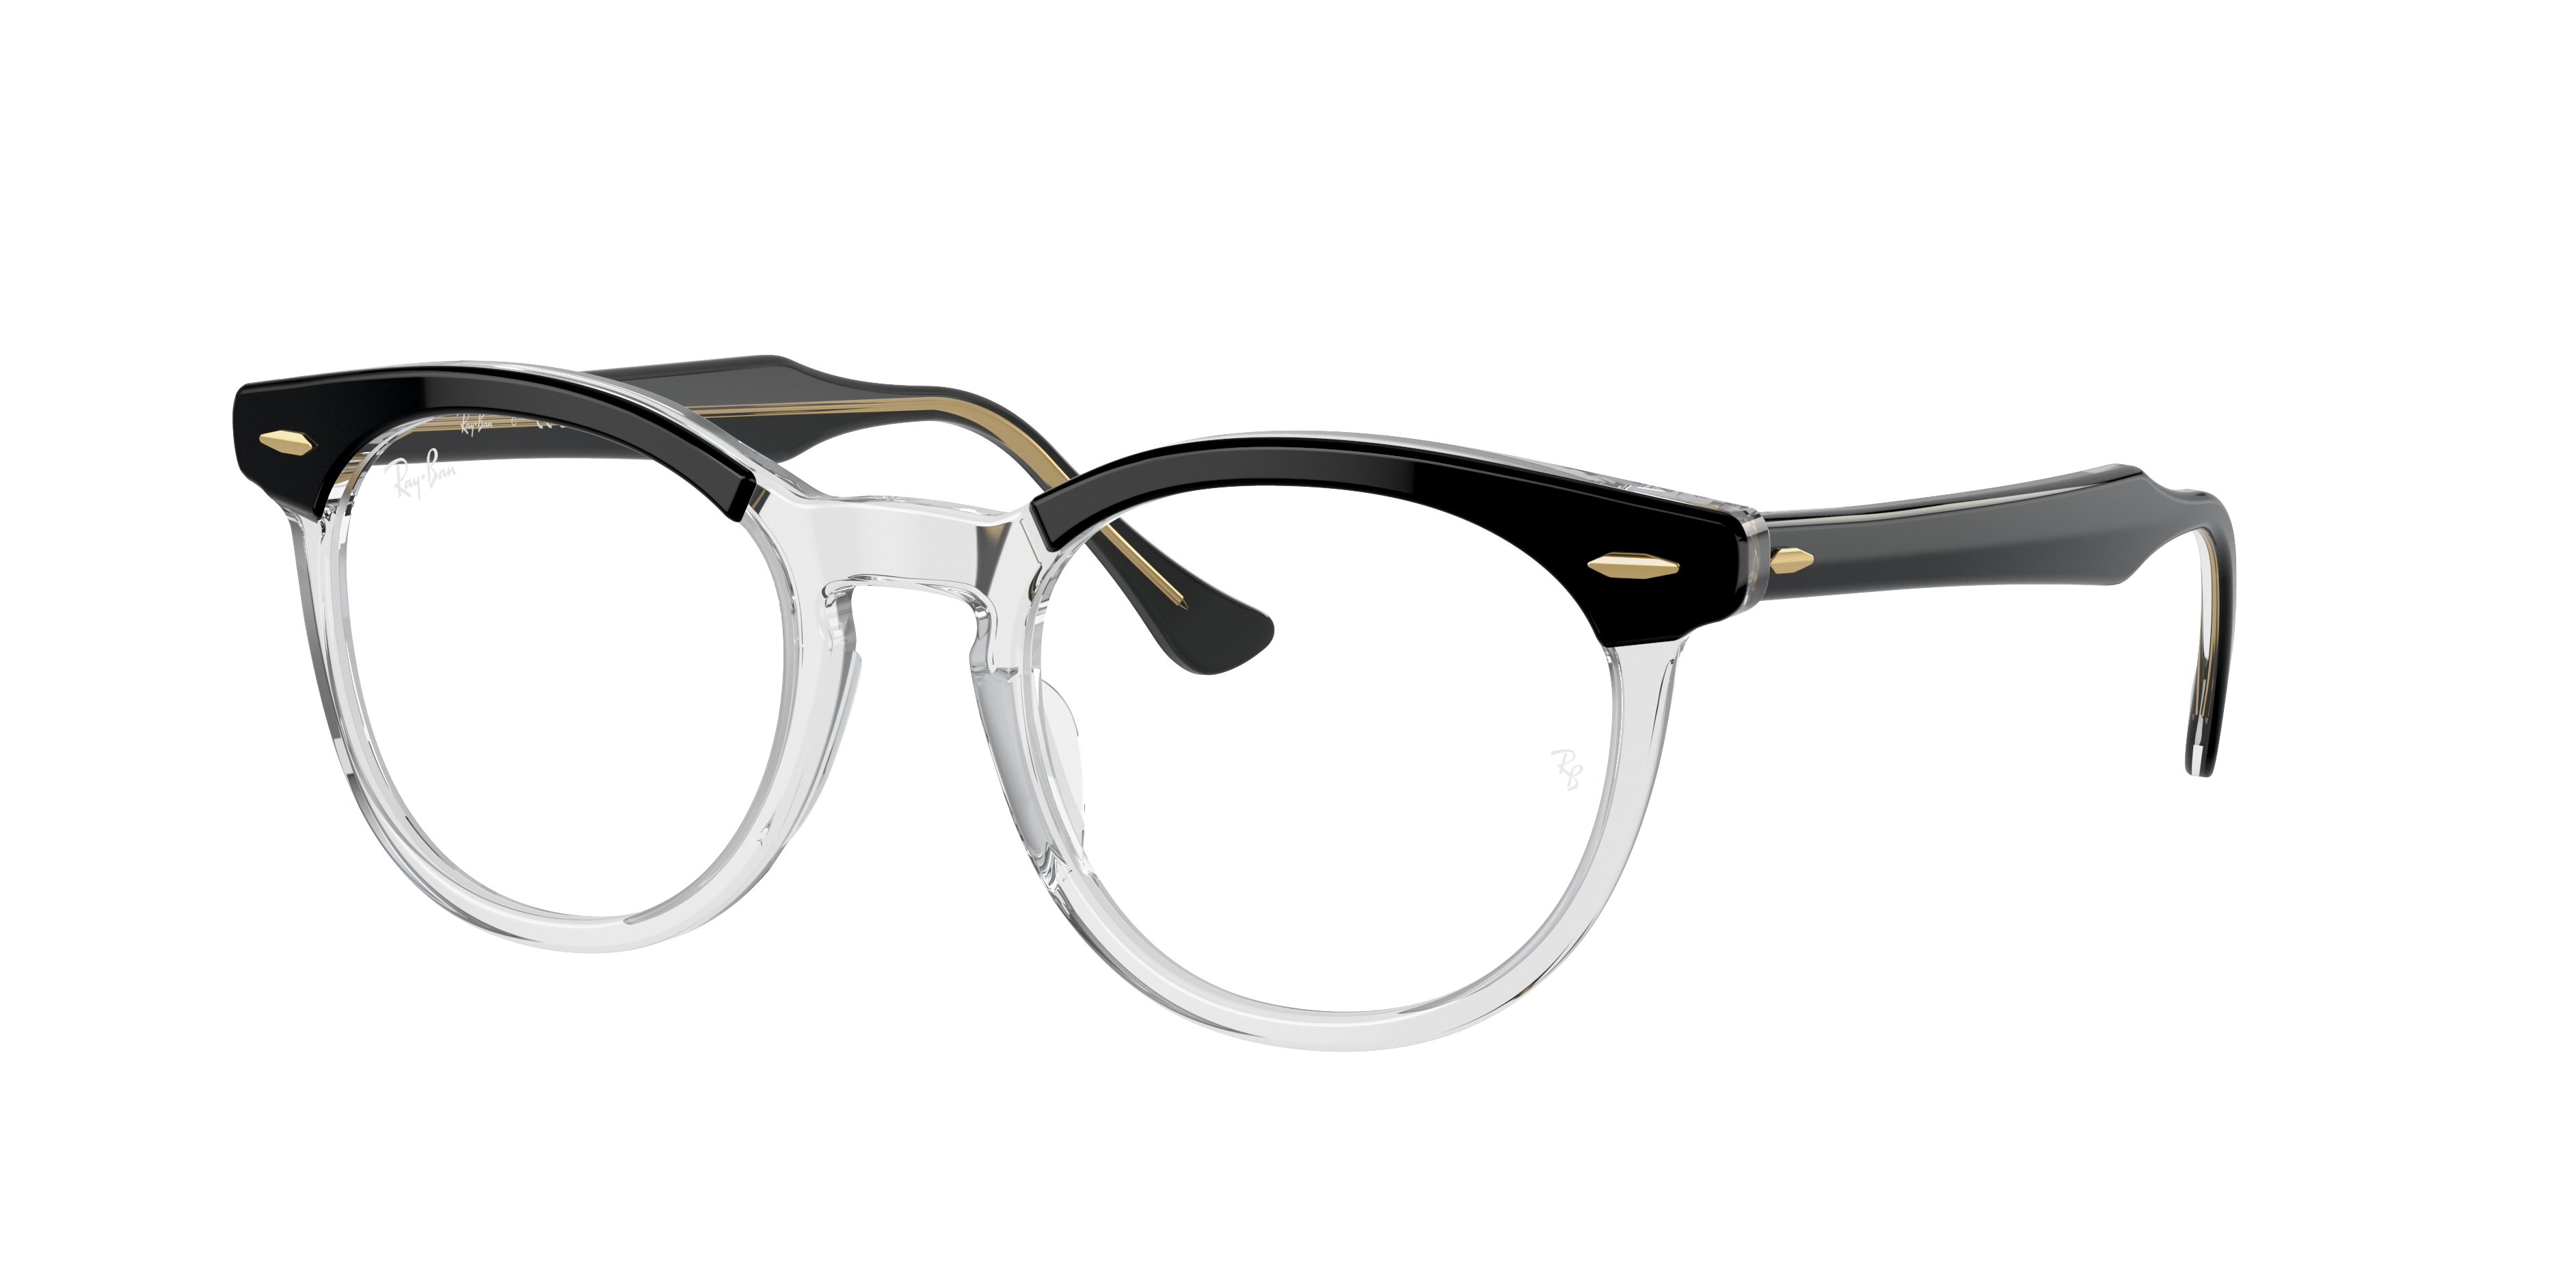 Eagle Eye Optics Eyeglasses with Black On Transparent Frame - RB5598 ...